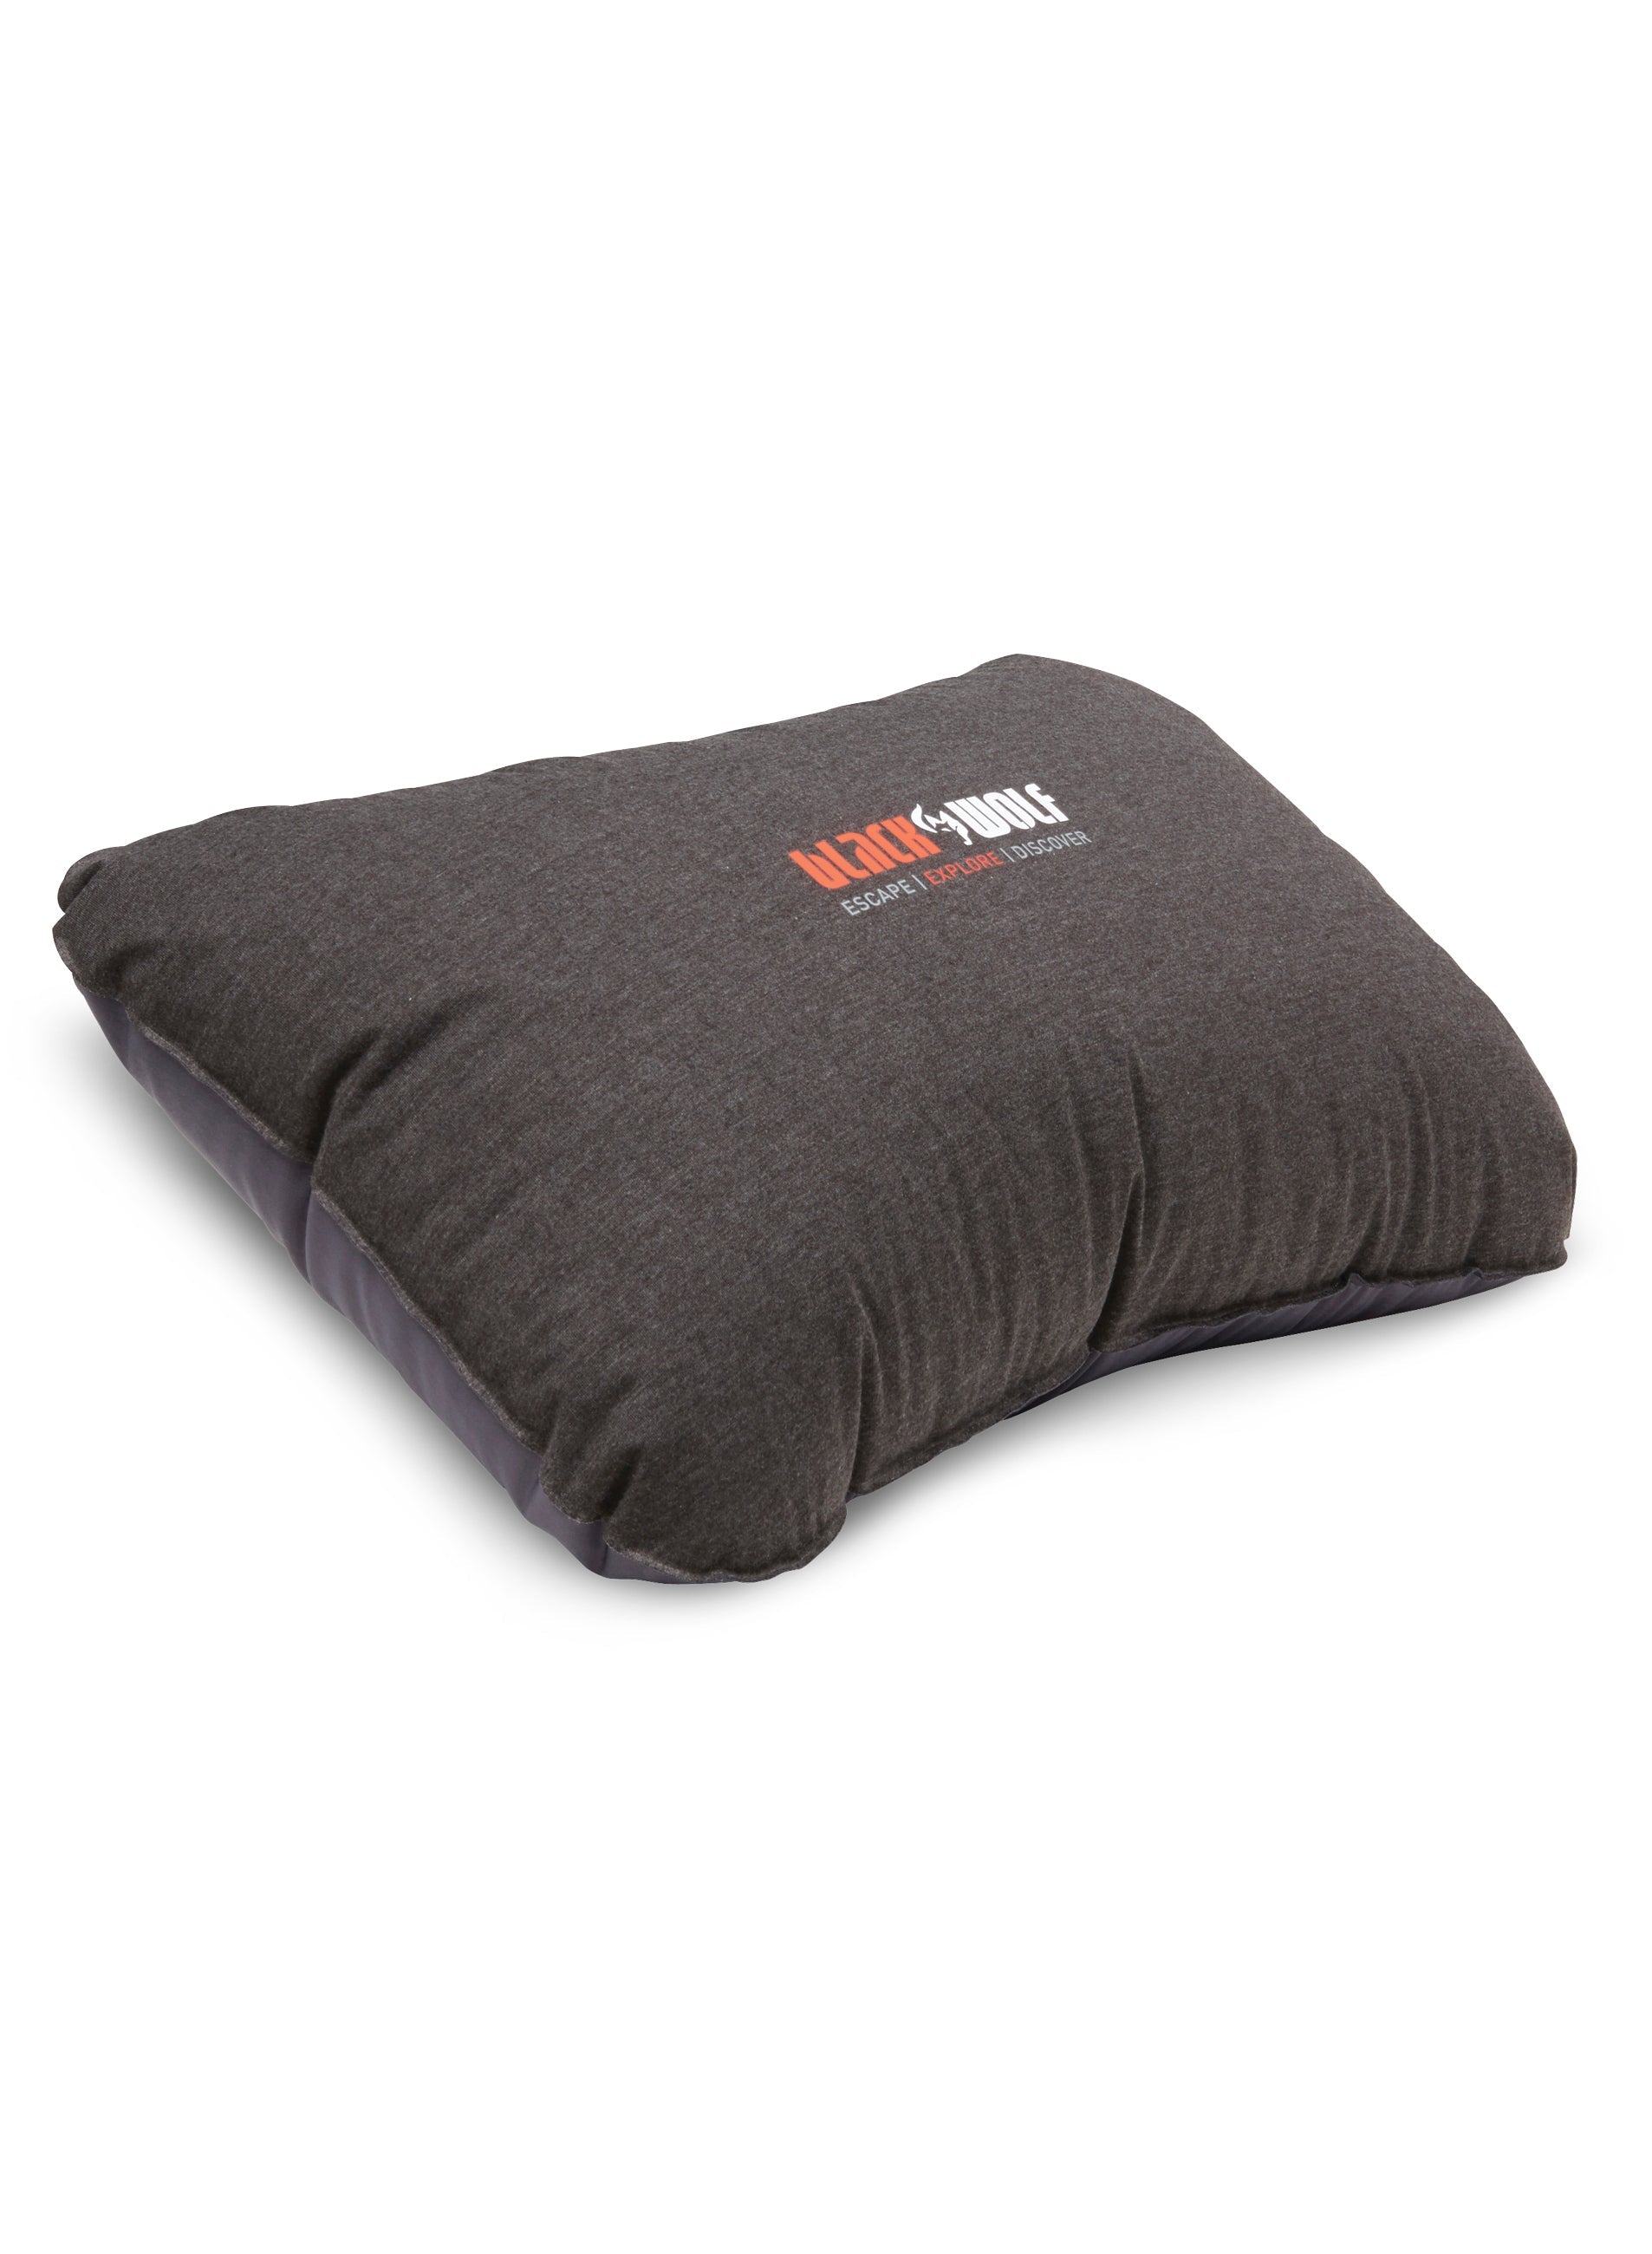 Black Wolf - Comfort Pillow XL - Black